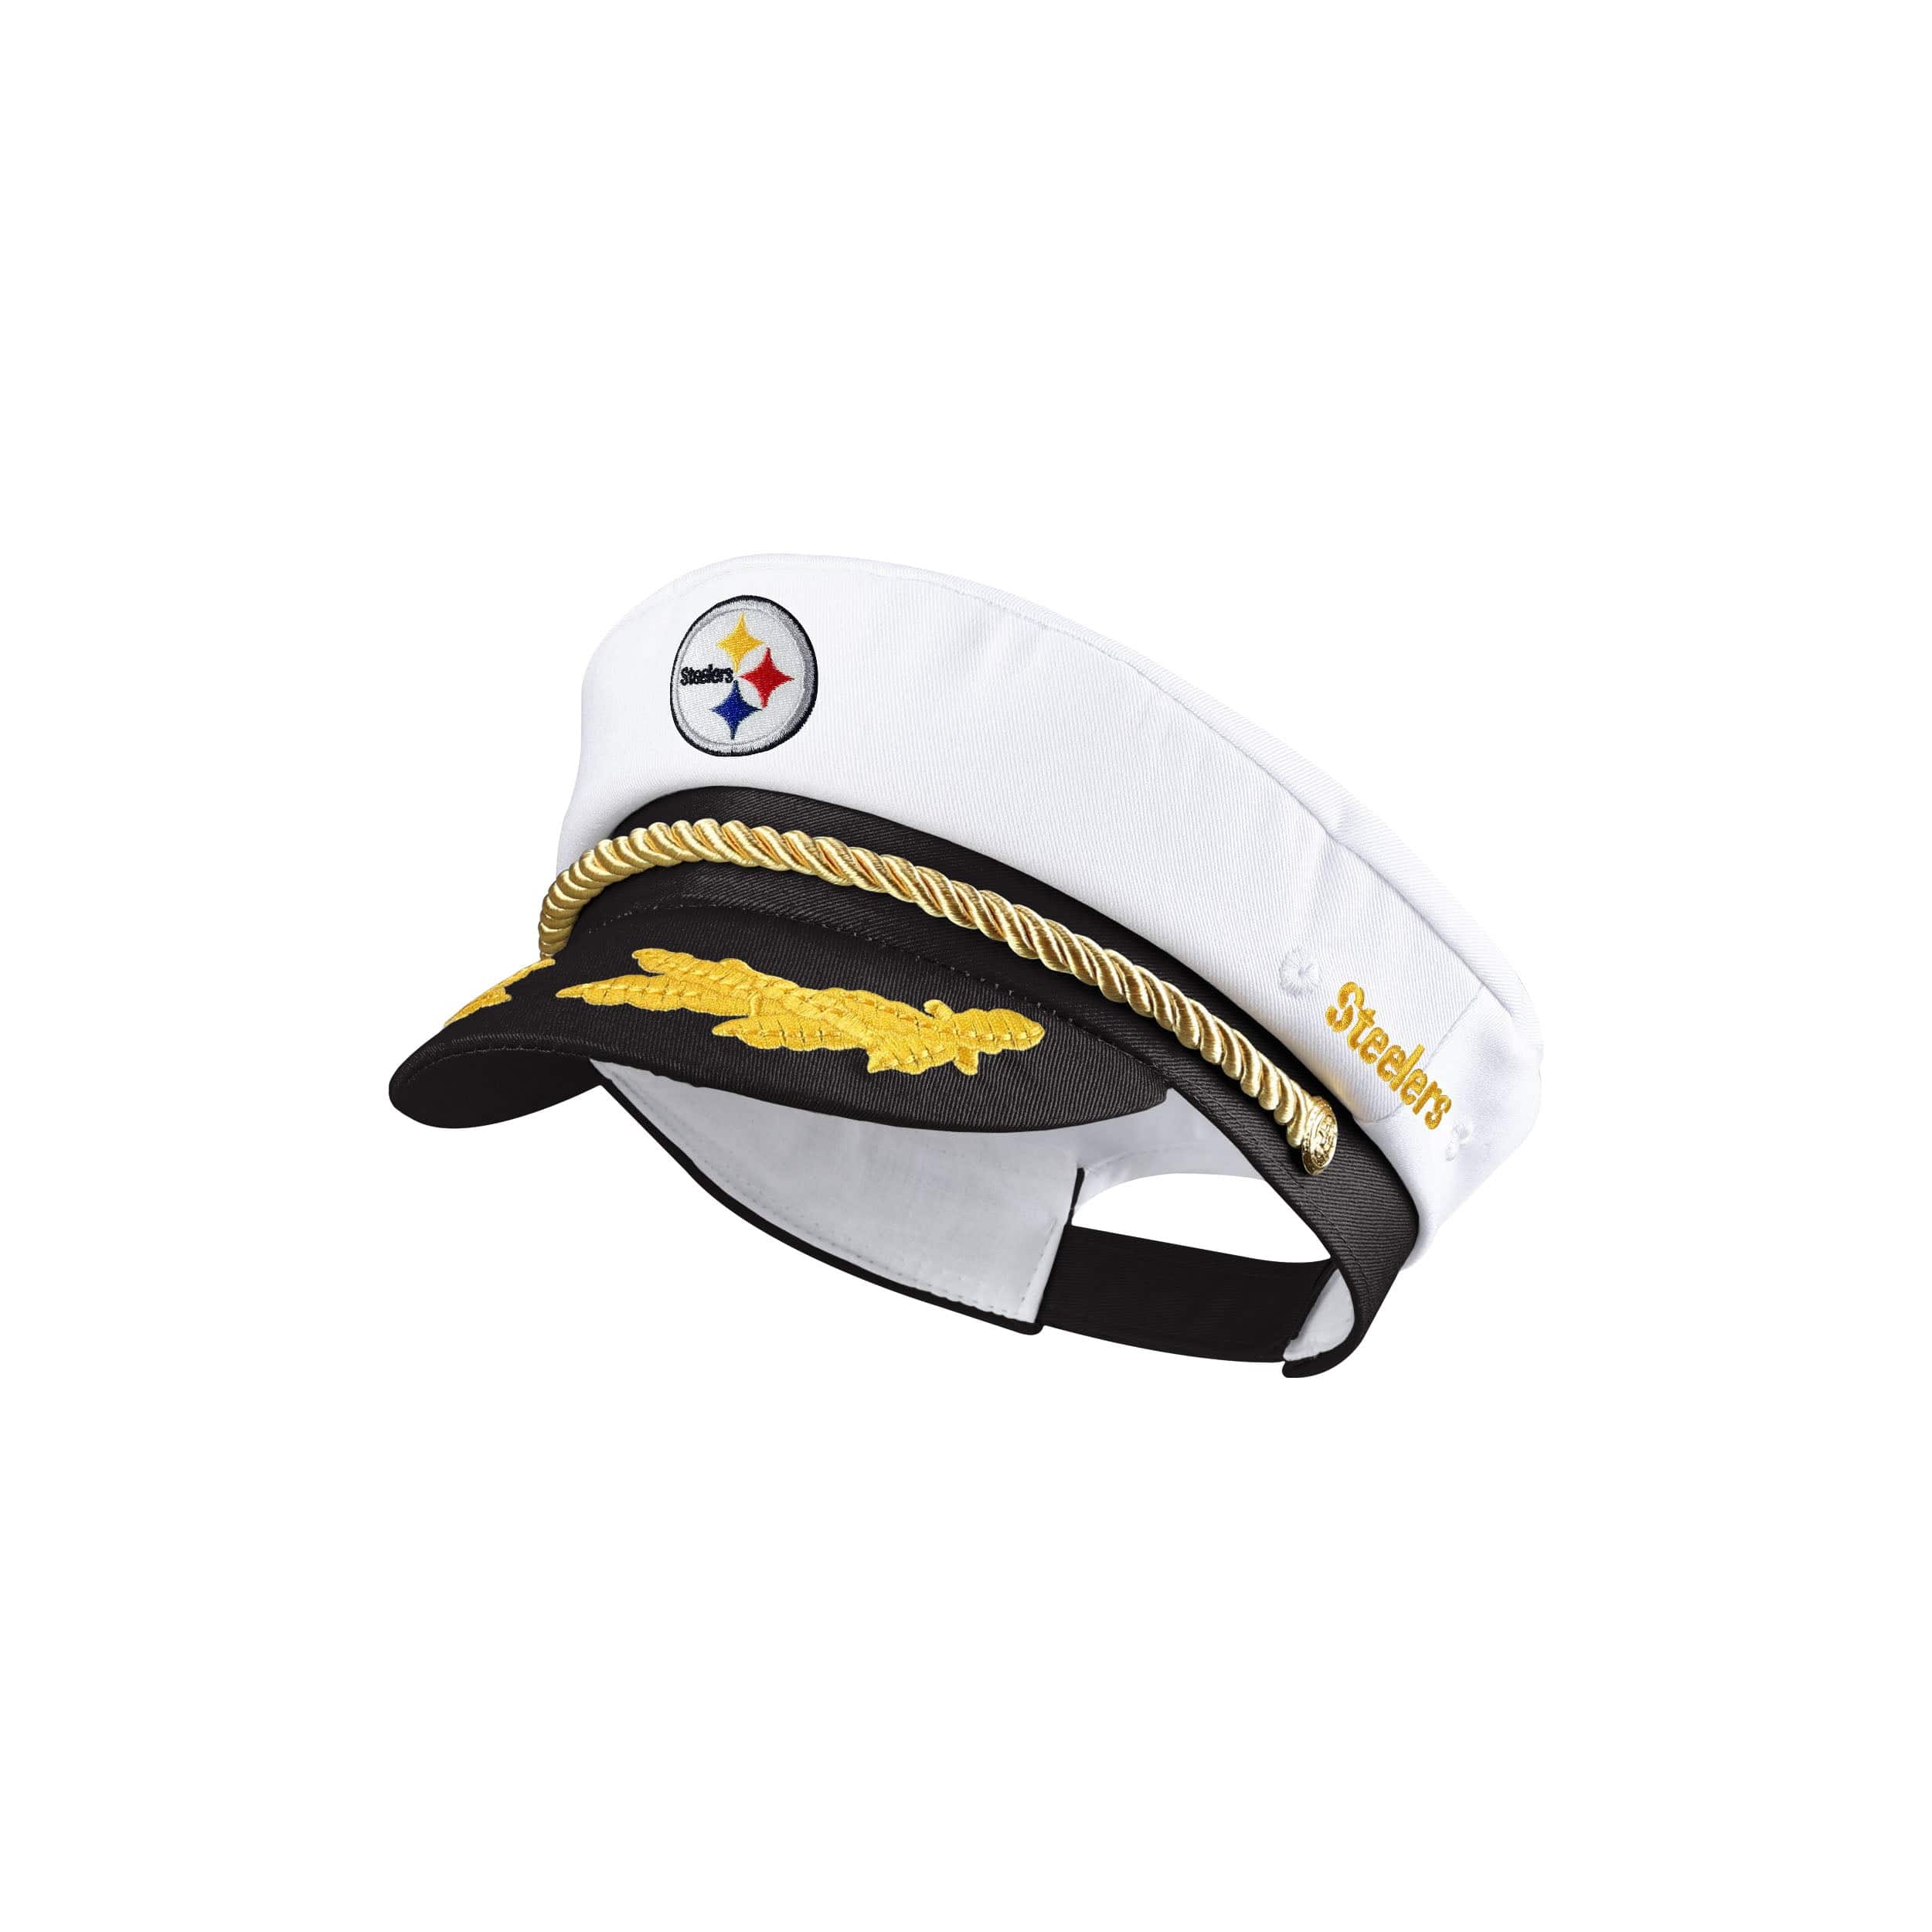 Pittsburgh Steelers Hats, Steelers Snapback, Baseball Cap